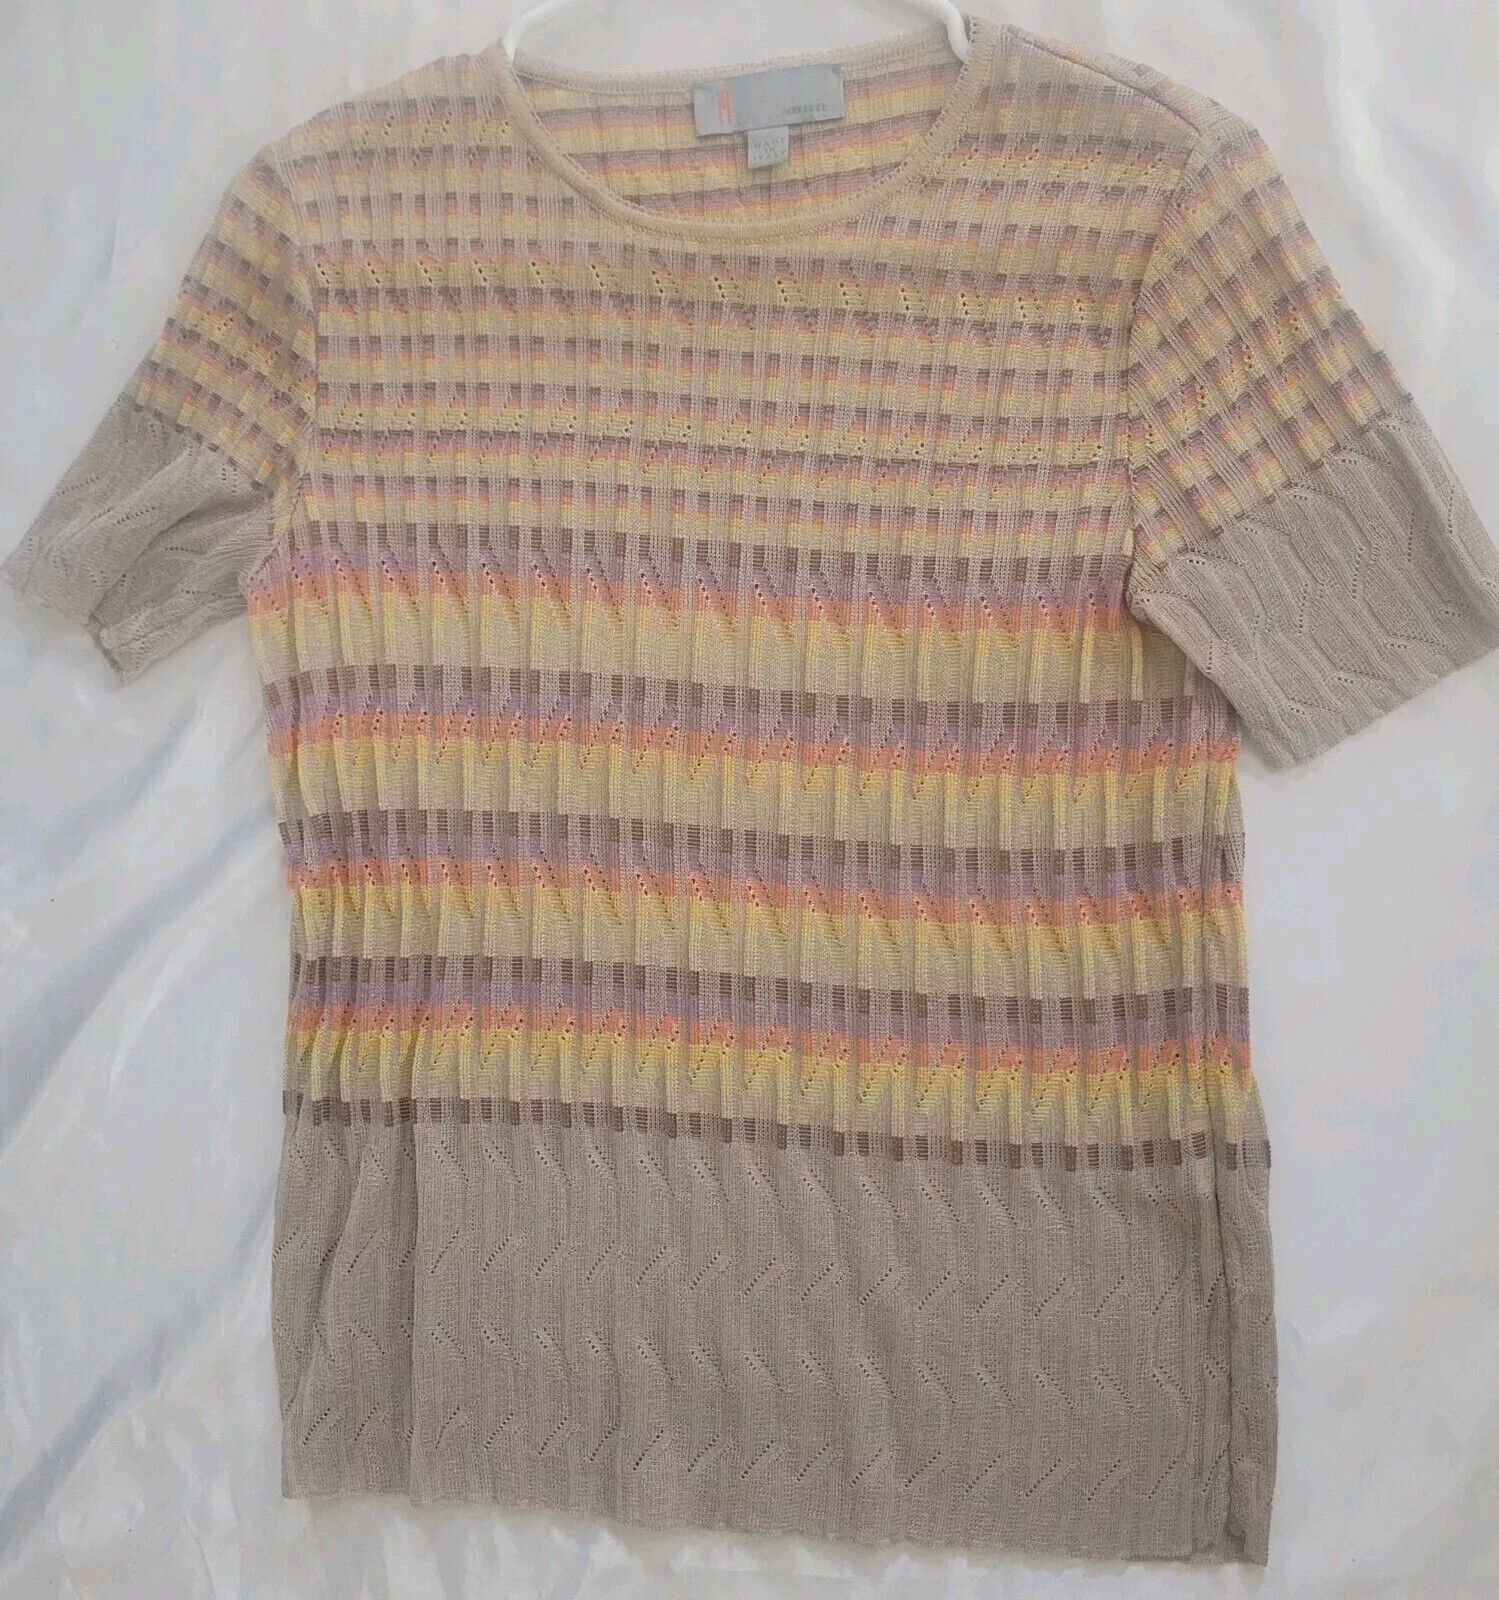 90s MISSONI Rainbow Stripe Top | Missoni Textured Metallic Knit Tee | Woven Knit